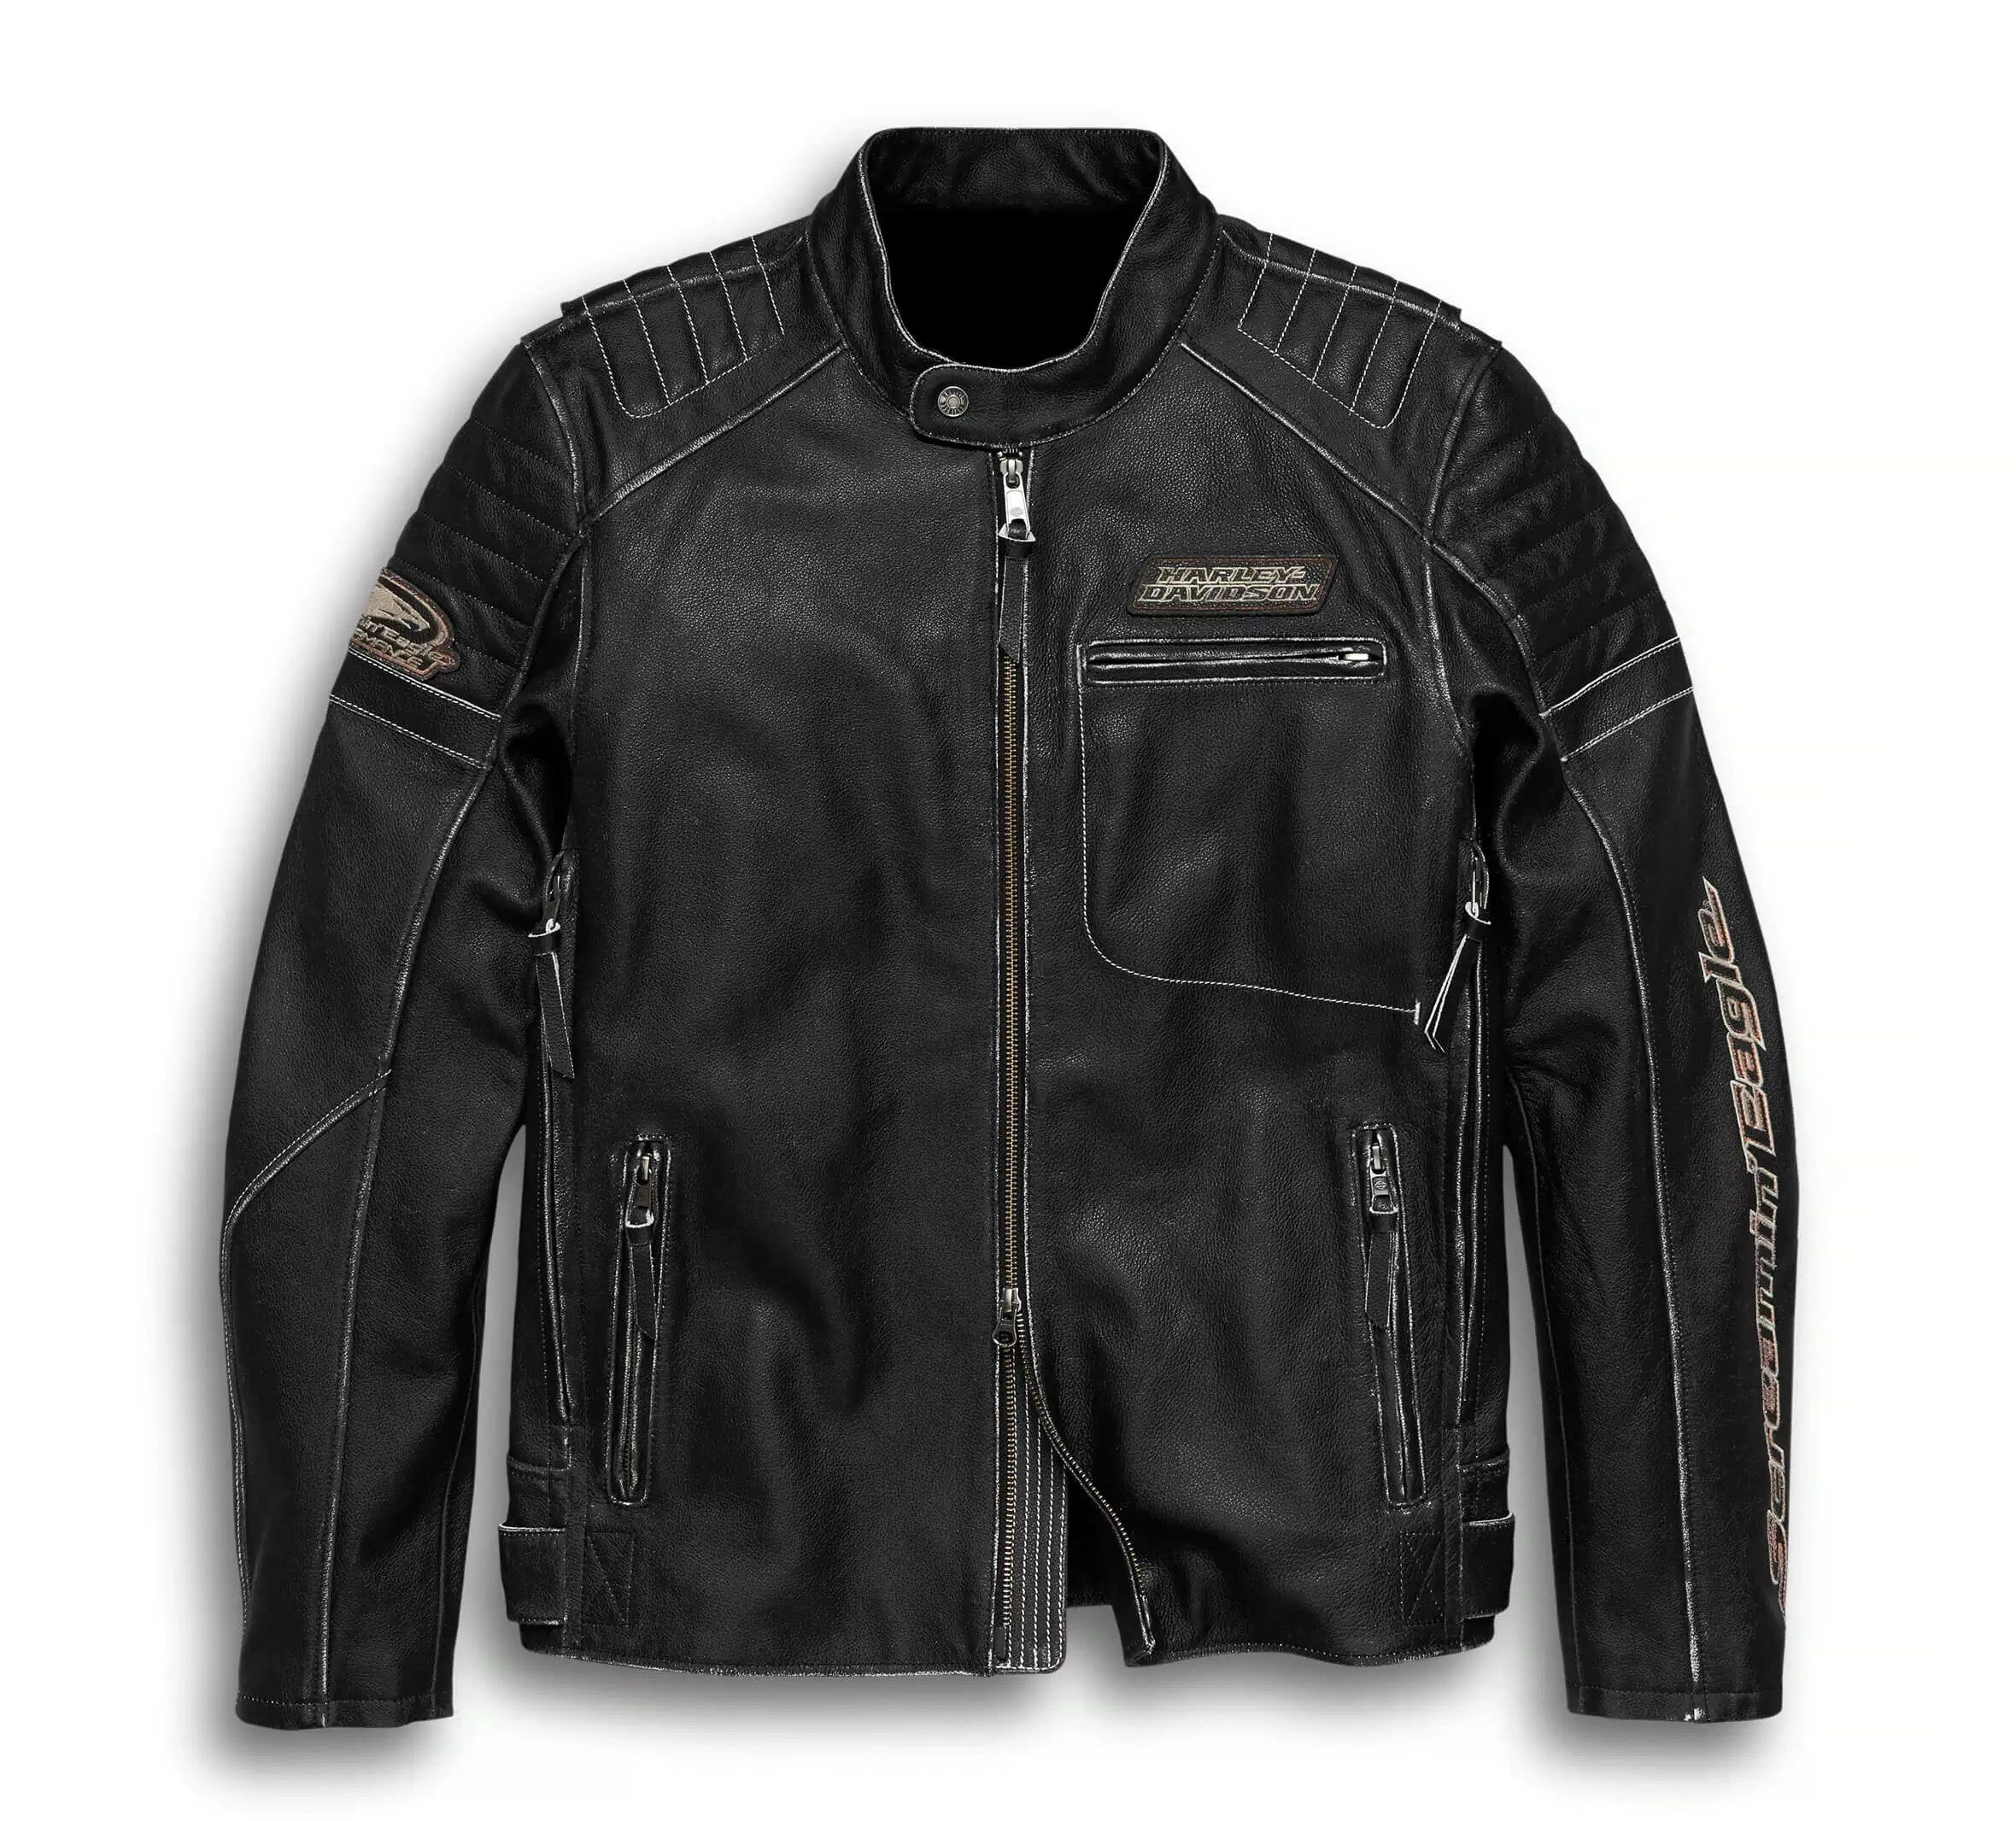 Harley Davidson Screamin Eagle Motorcycle Jacket